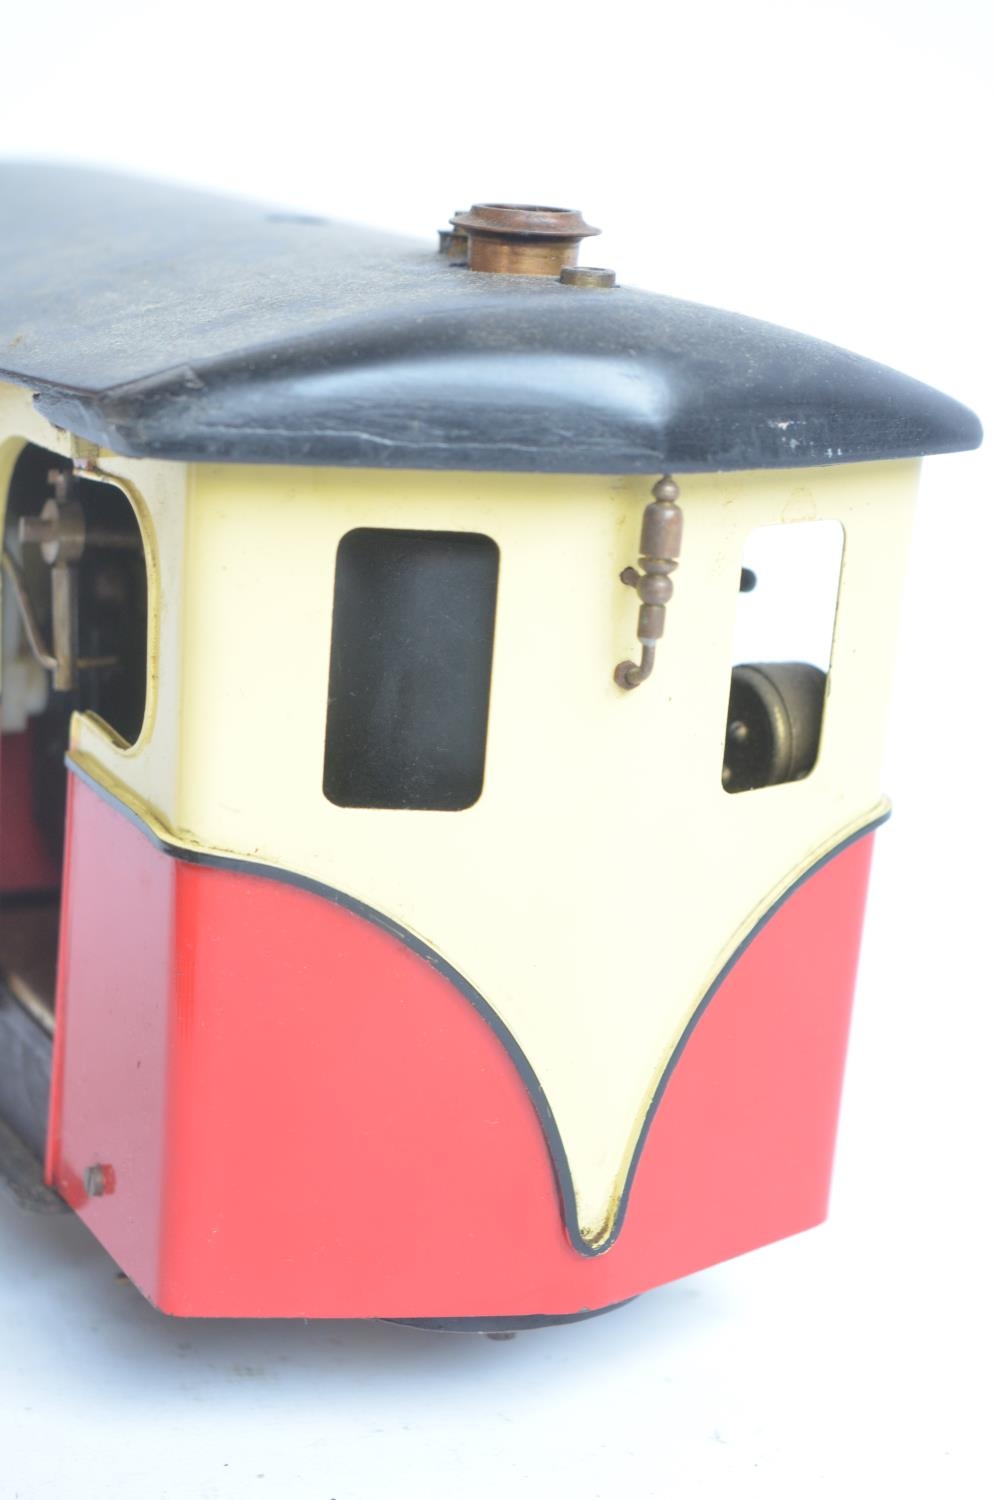 32mm G gauge outdoor metal narrow railcar model steam locomotive with added remote control - Bild 4 aus 8